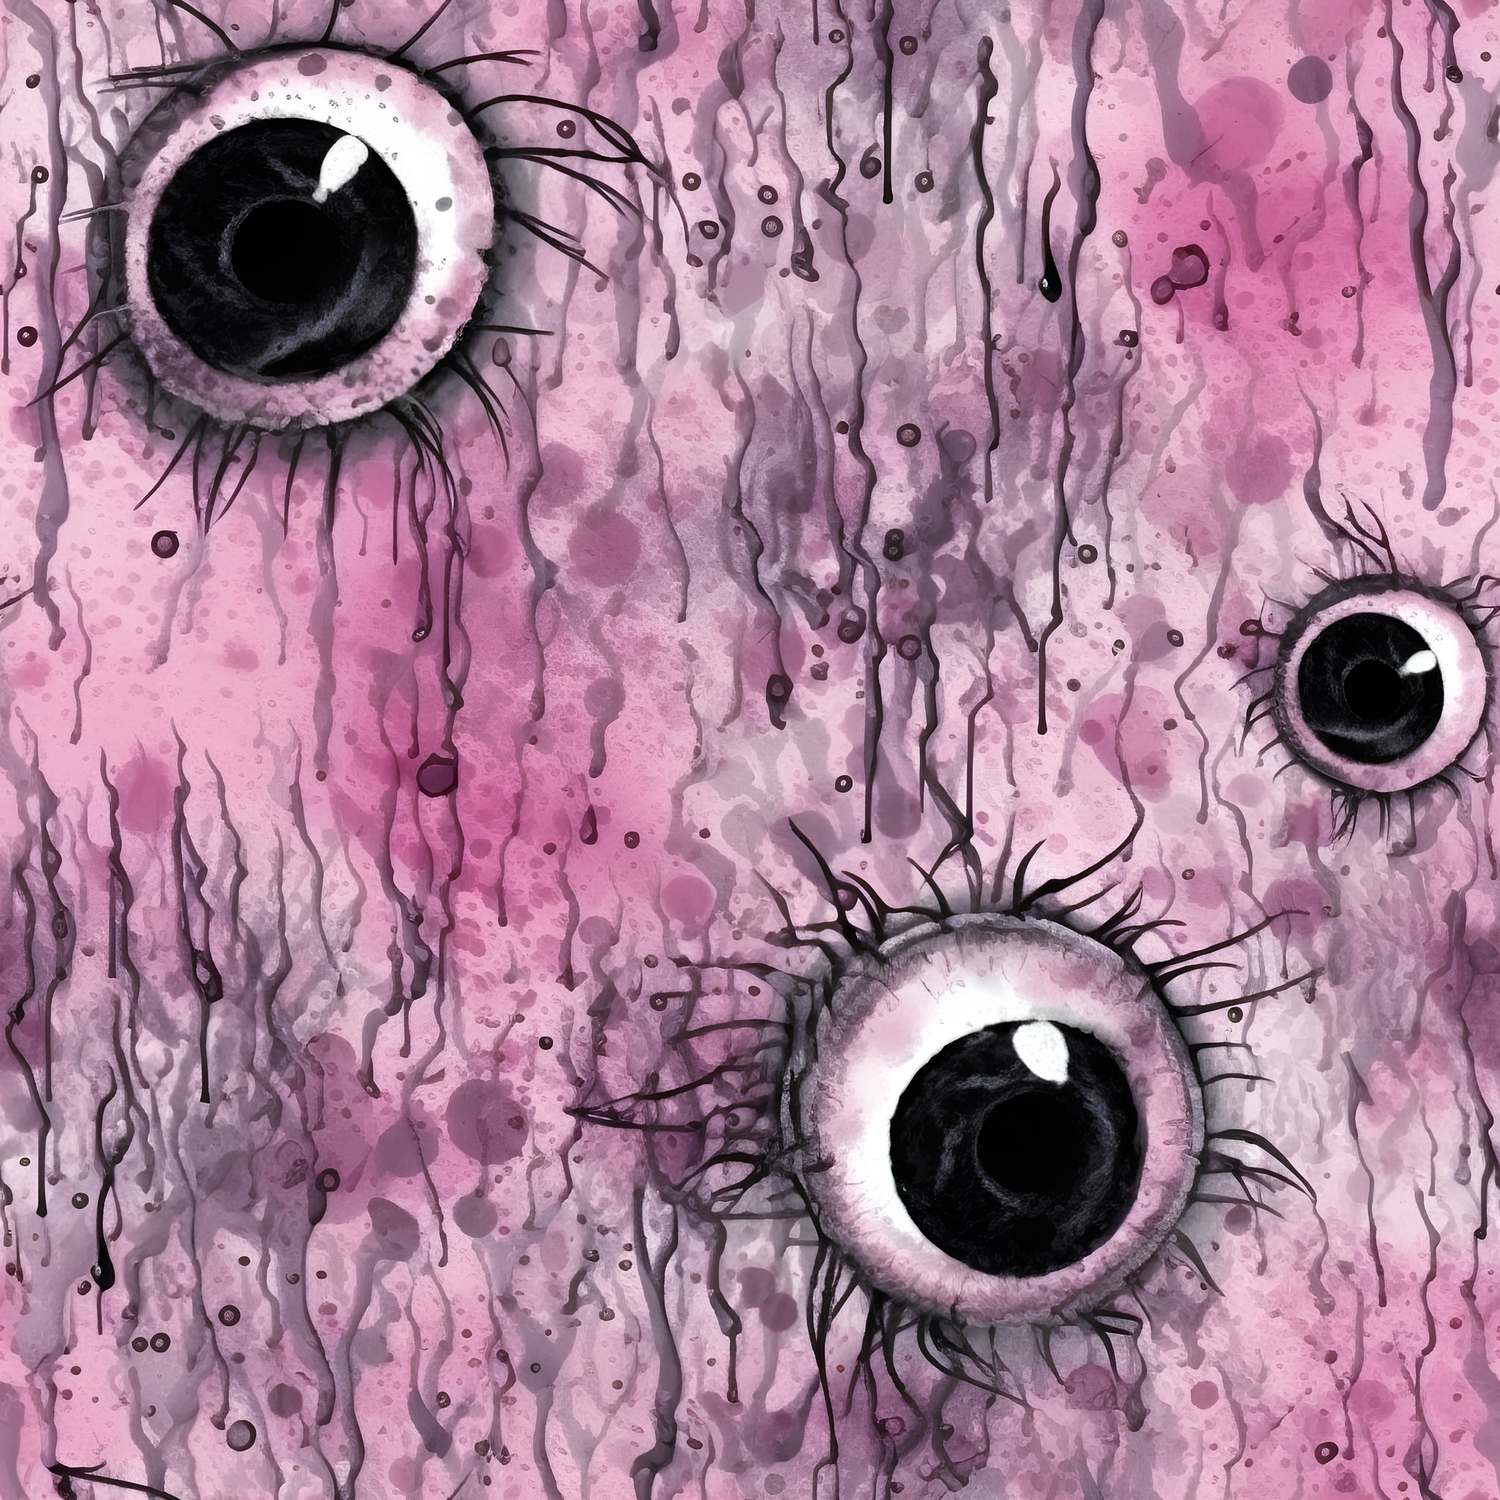 Creepy pinky eyes